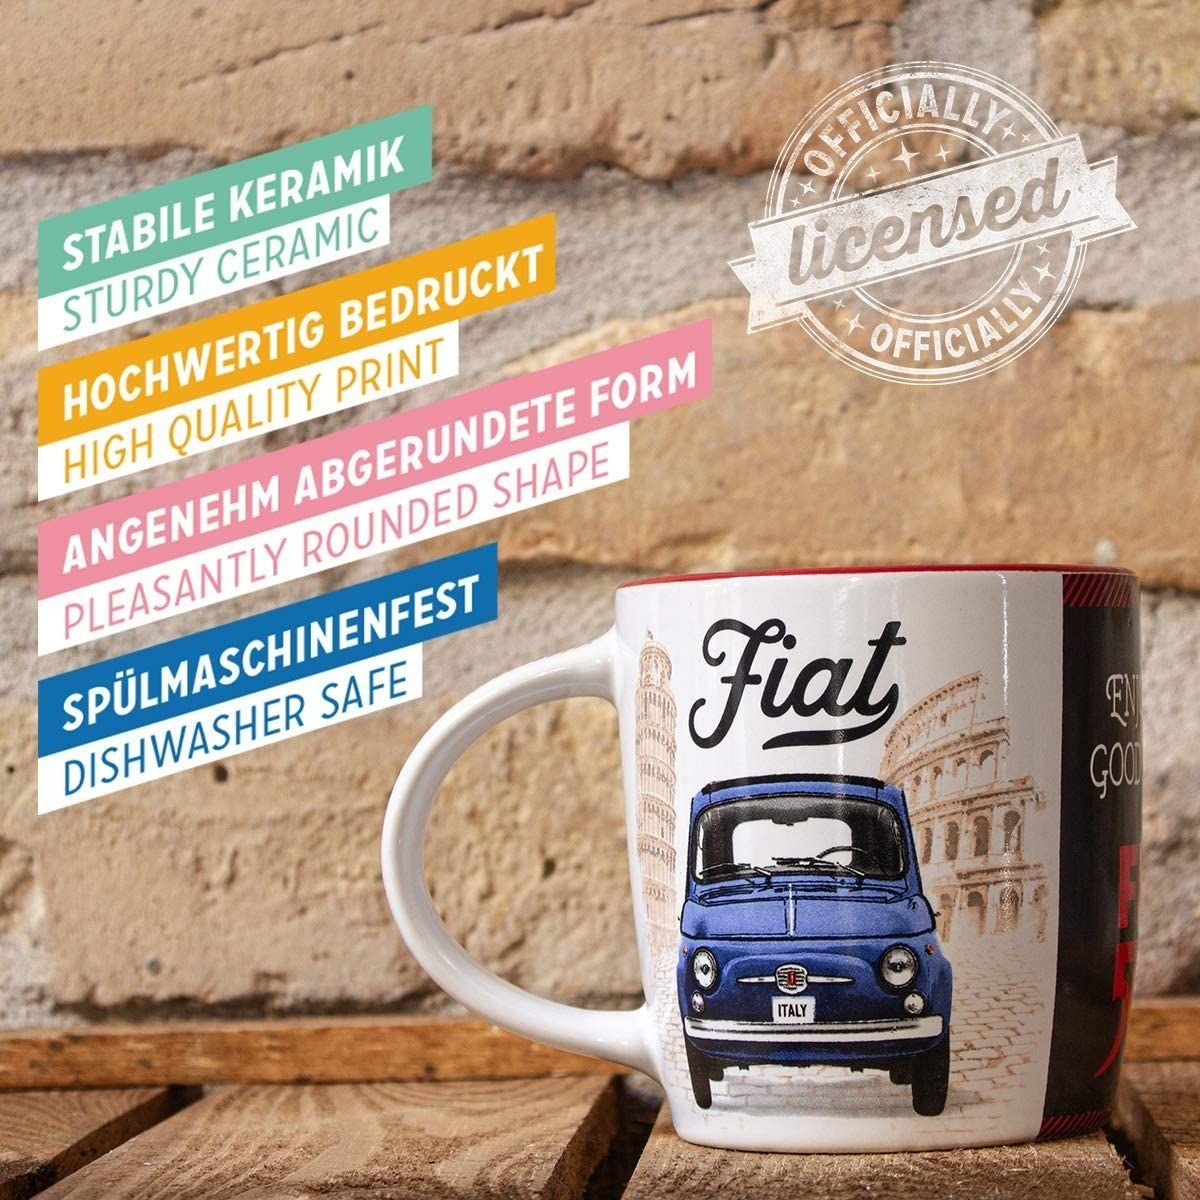 Times - 500 Fiat Tasse Nostalgic-Art Kaffeetasse Good Enjoy Fiat - The